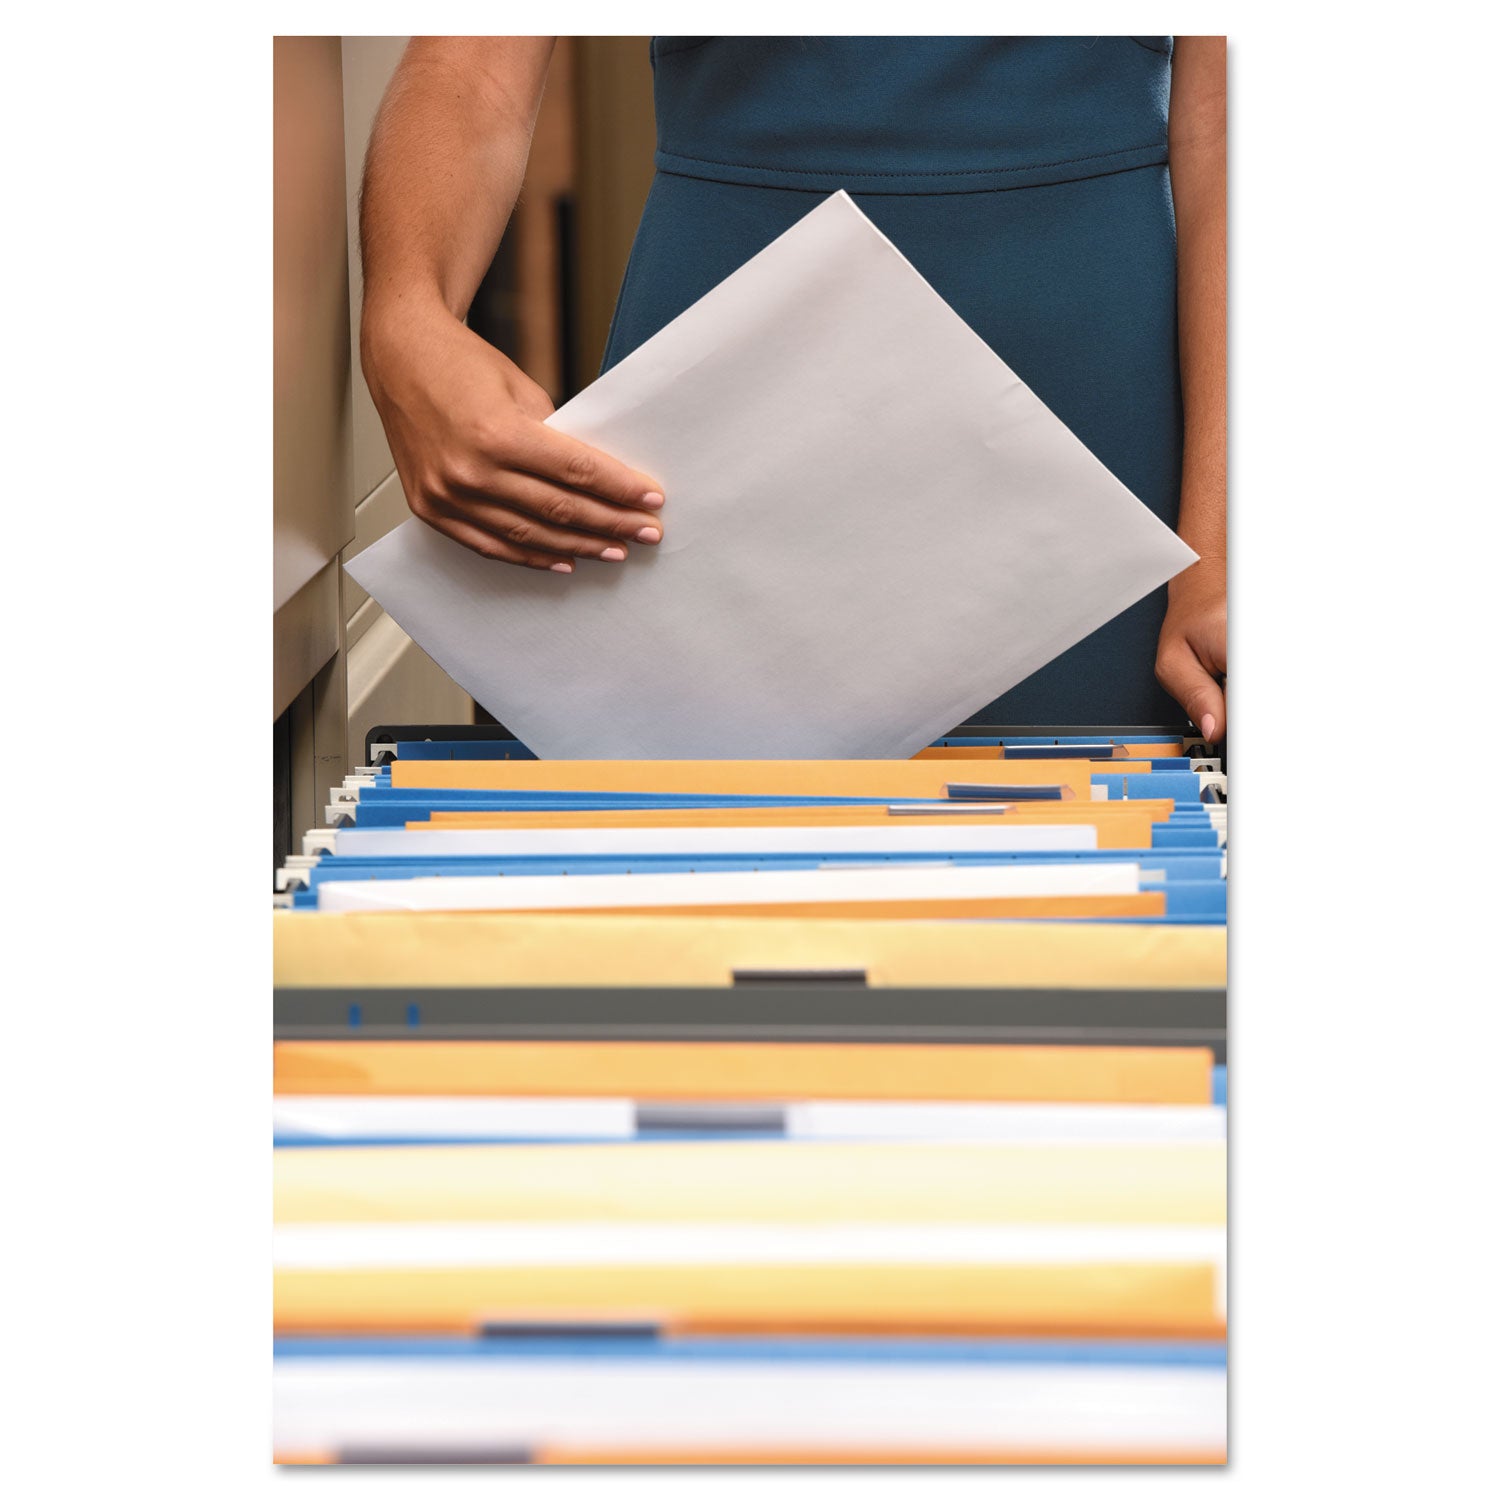 Catalog Envelope, 24 lb Bond Weight Paper, #1, Square Flap, Gummed Closure, 6 x 9, White, 500/Box - 